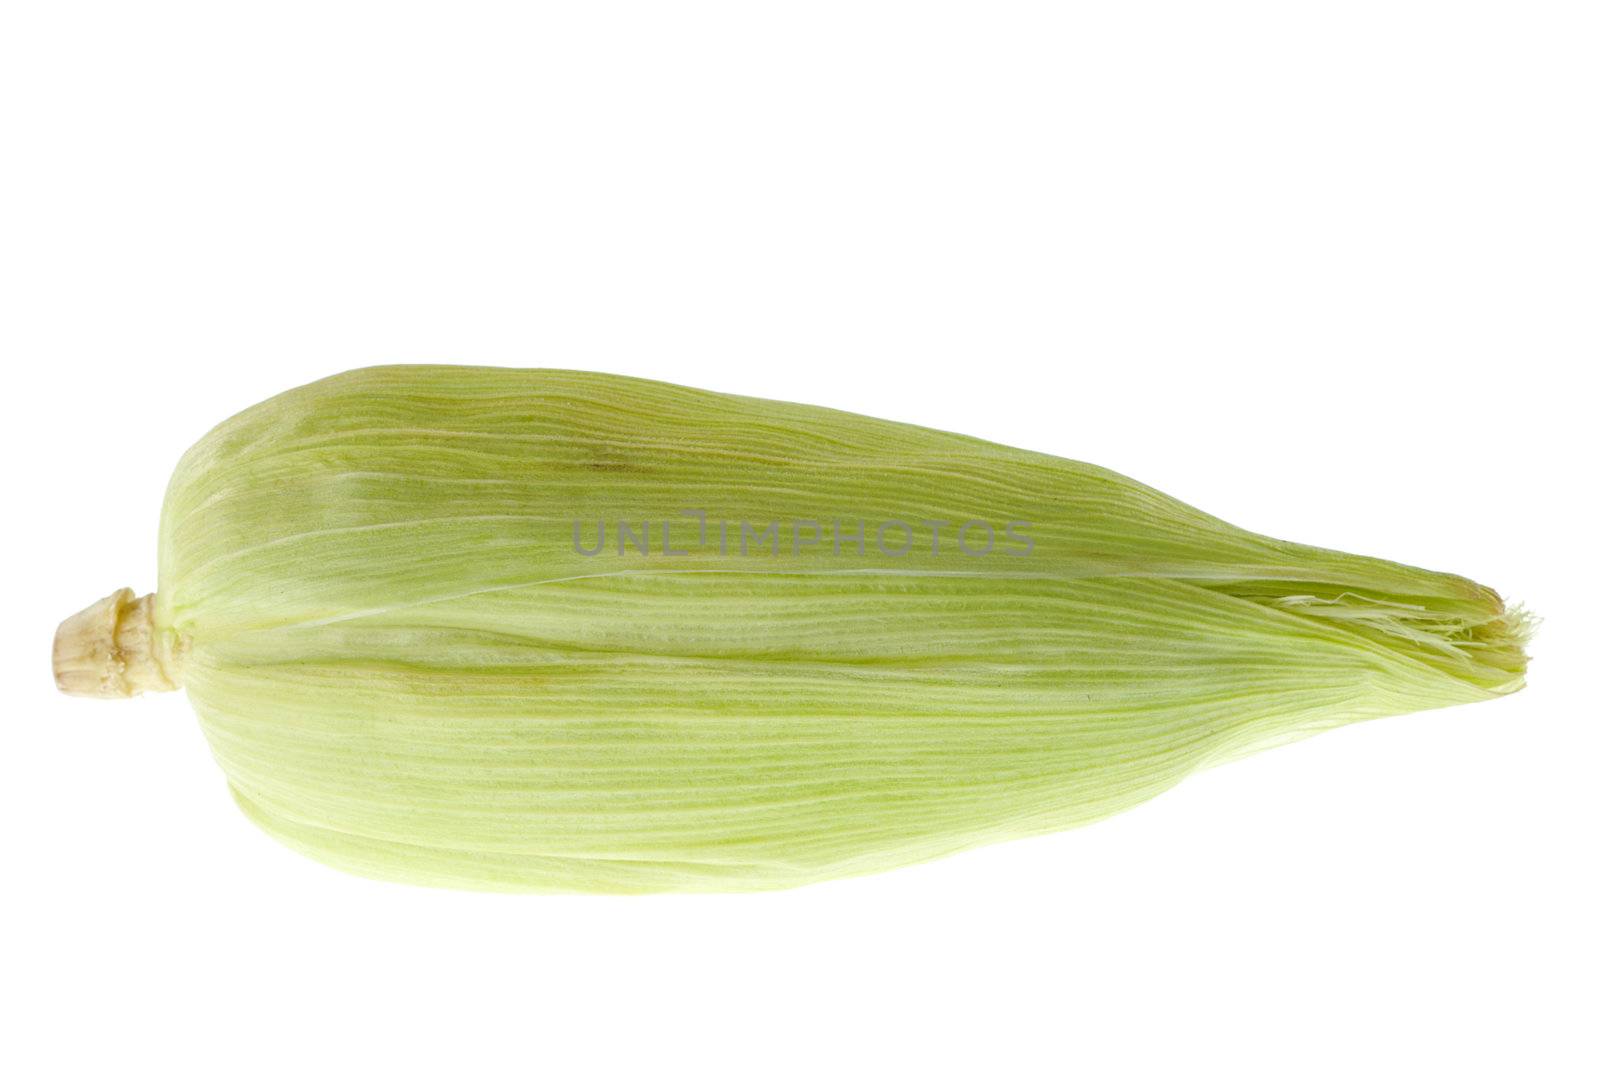 Corn Cob on White by ildi